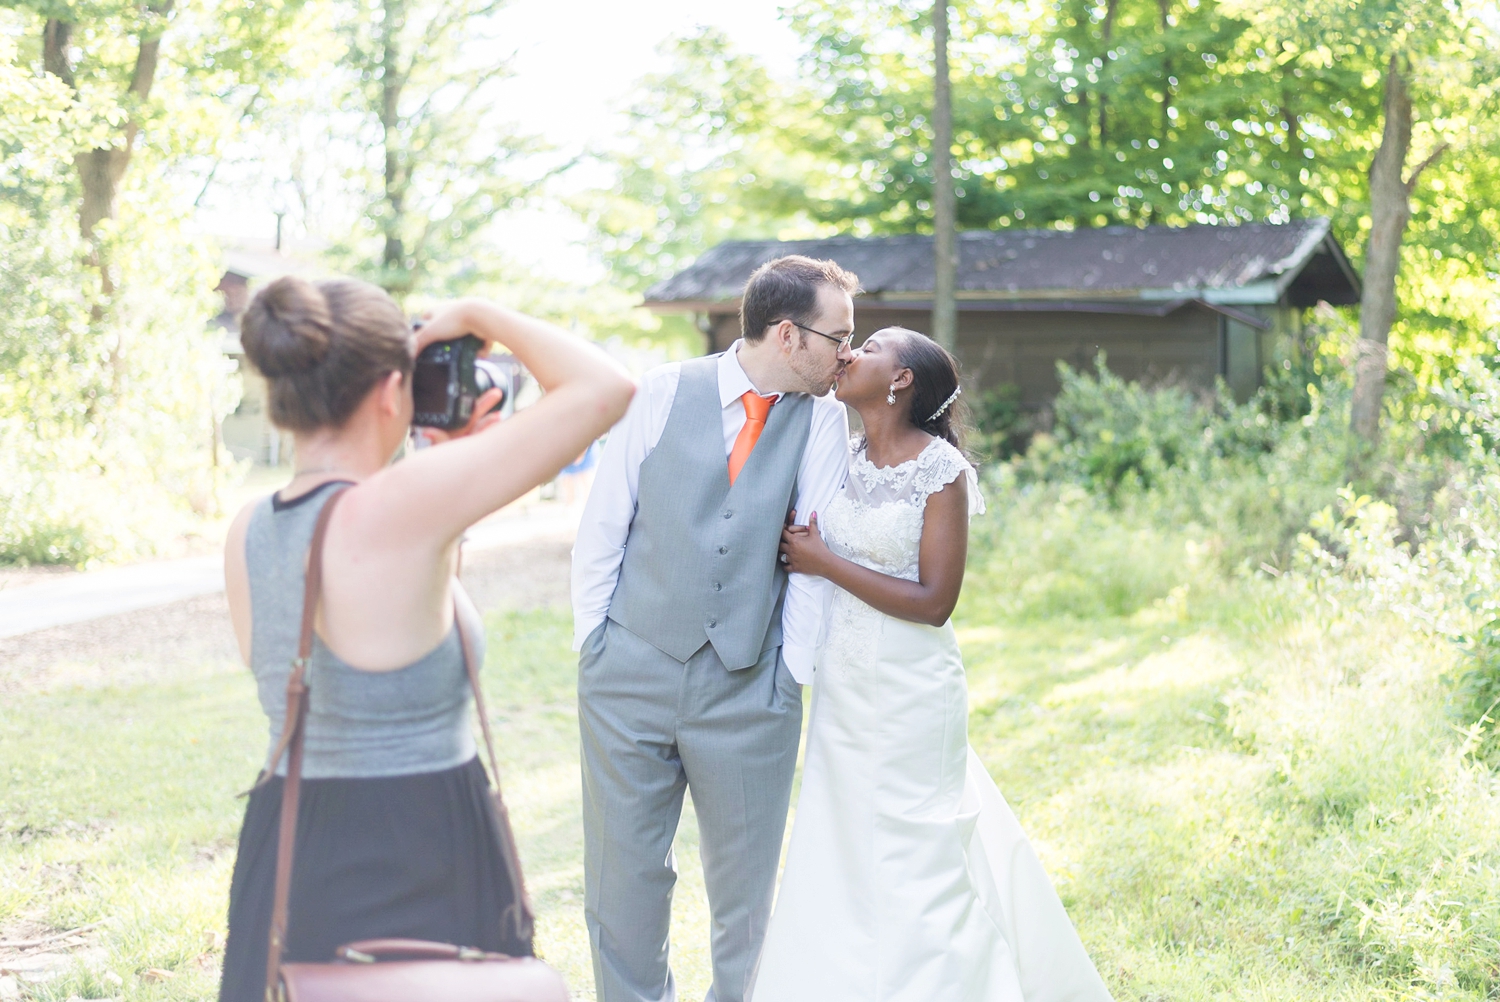 behind-the-scenes-of-a-wedding-photographer-stephanie-brann-photography_0129